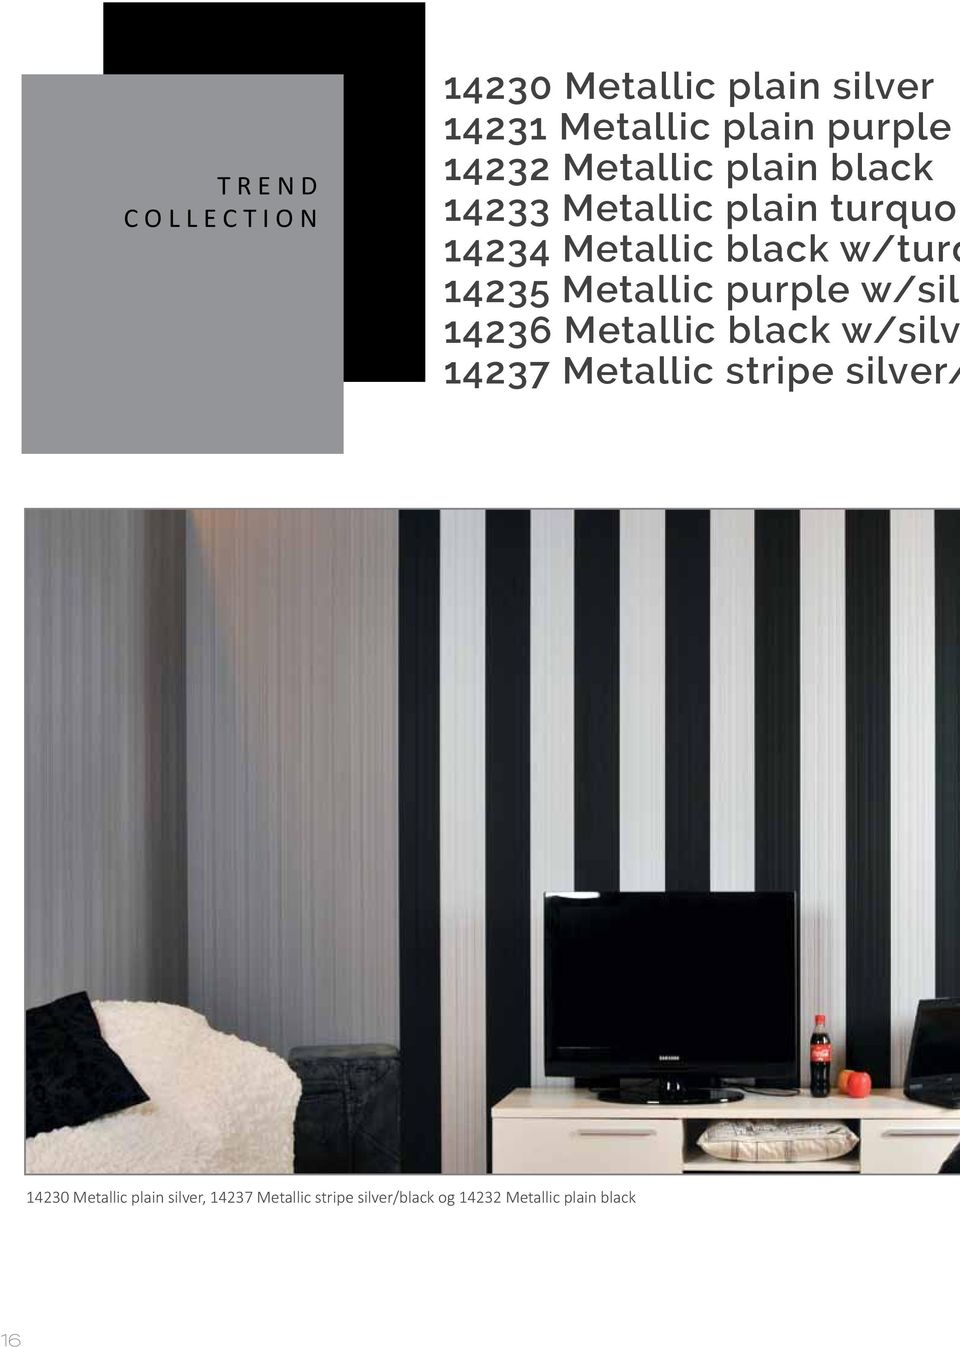 14235 Metallic purple w/silv 14236 Metallic black w/silv 14237 Metallic stripe silver/